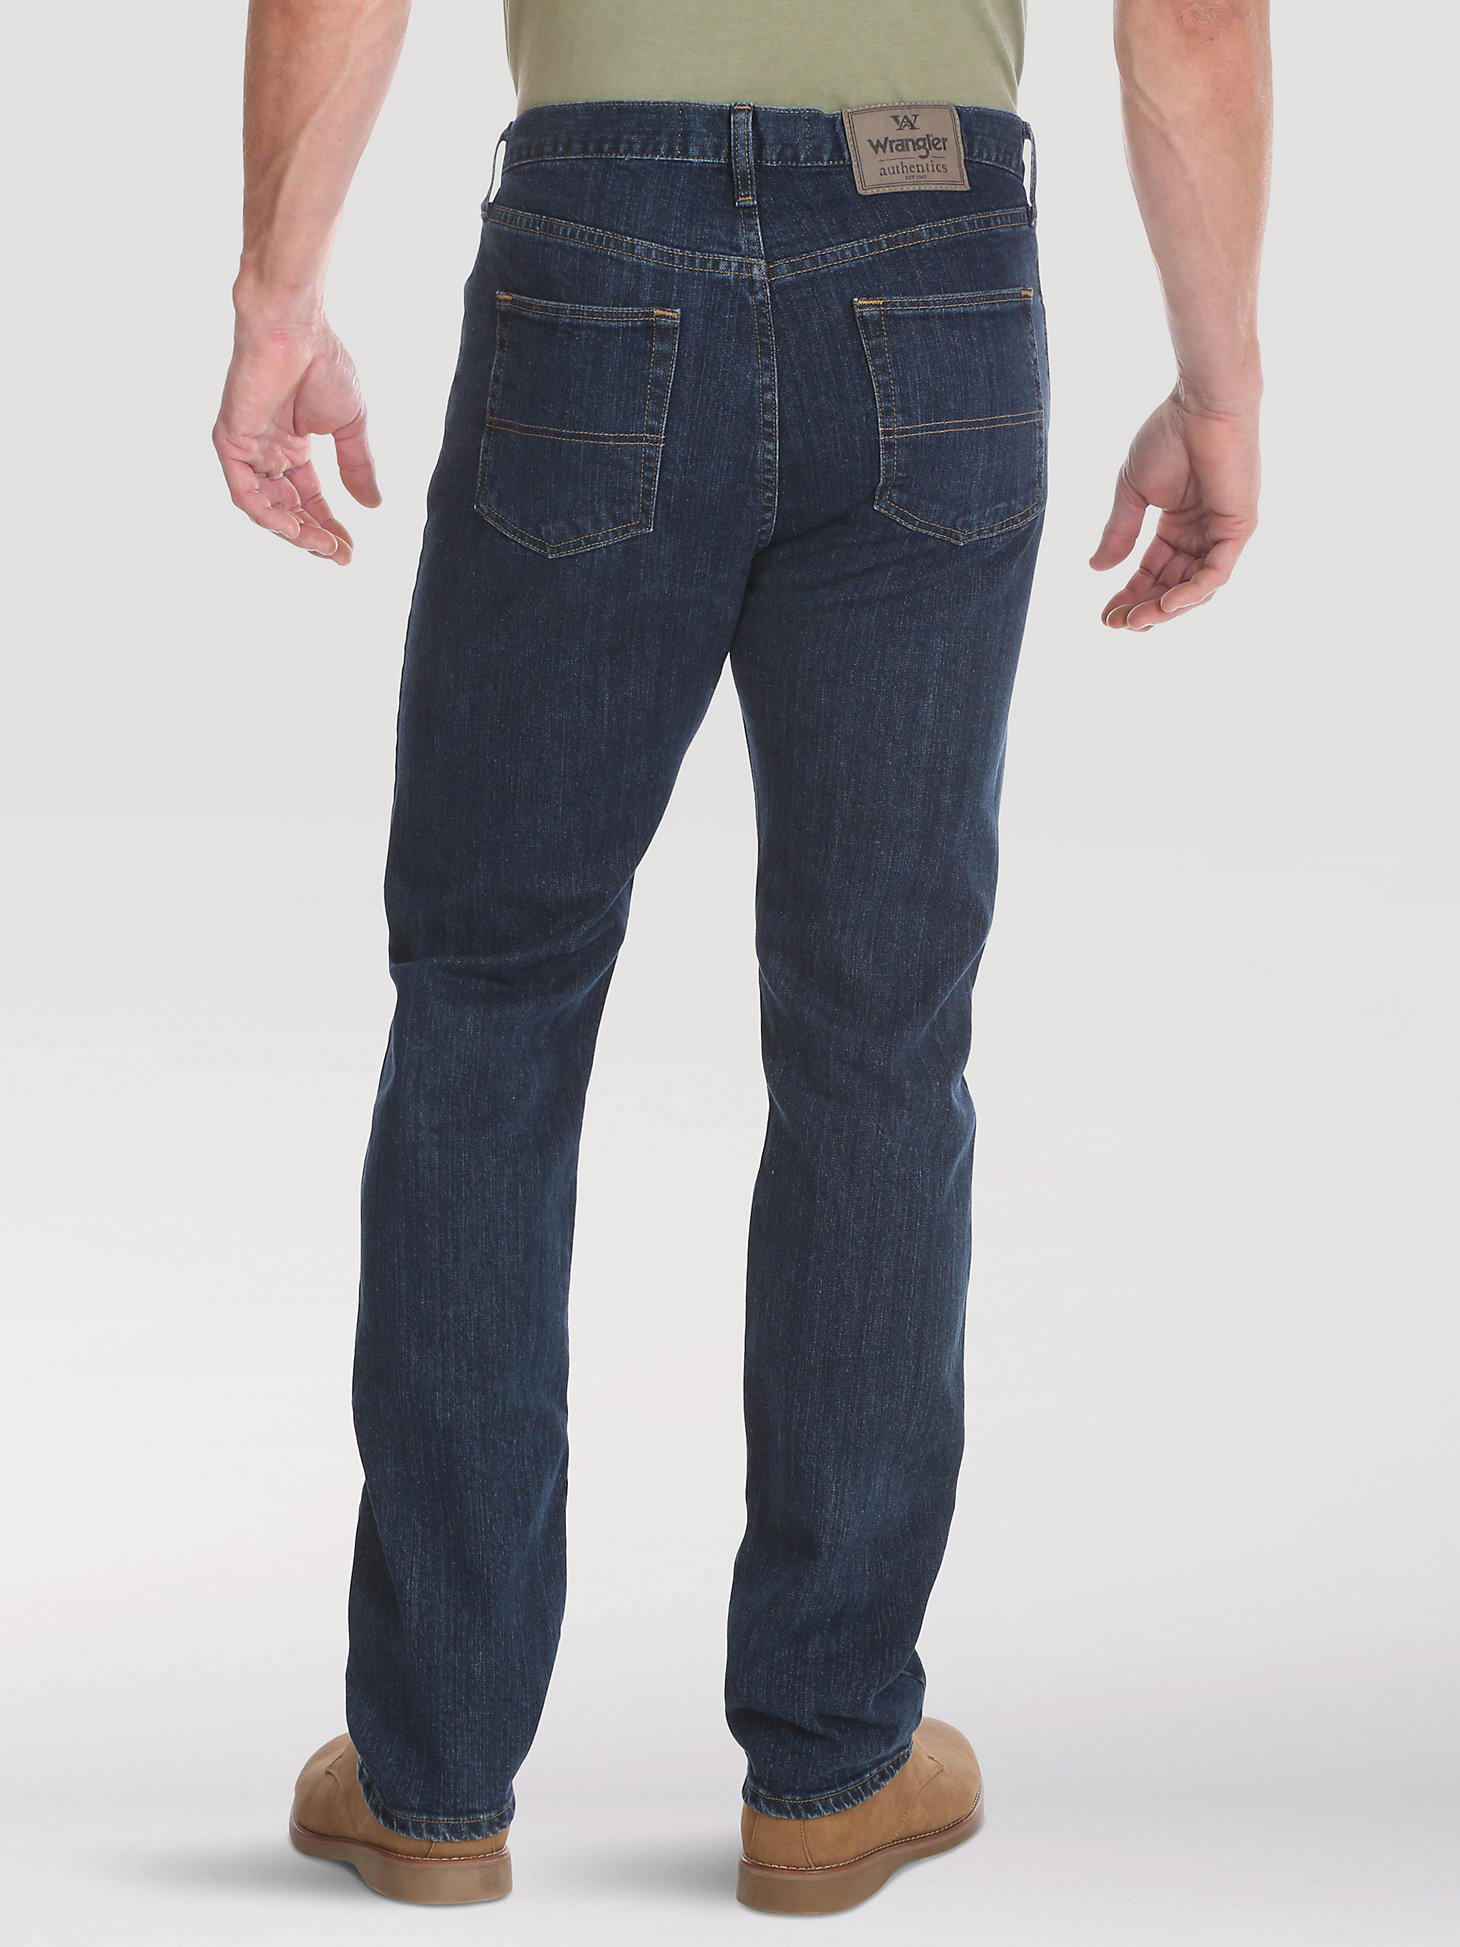 Men's Wrangler Authentics® Regular Fit Flex Jean in Indigo Dark